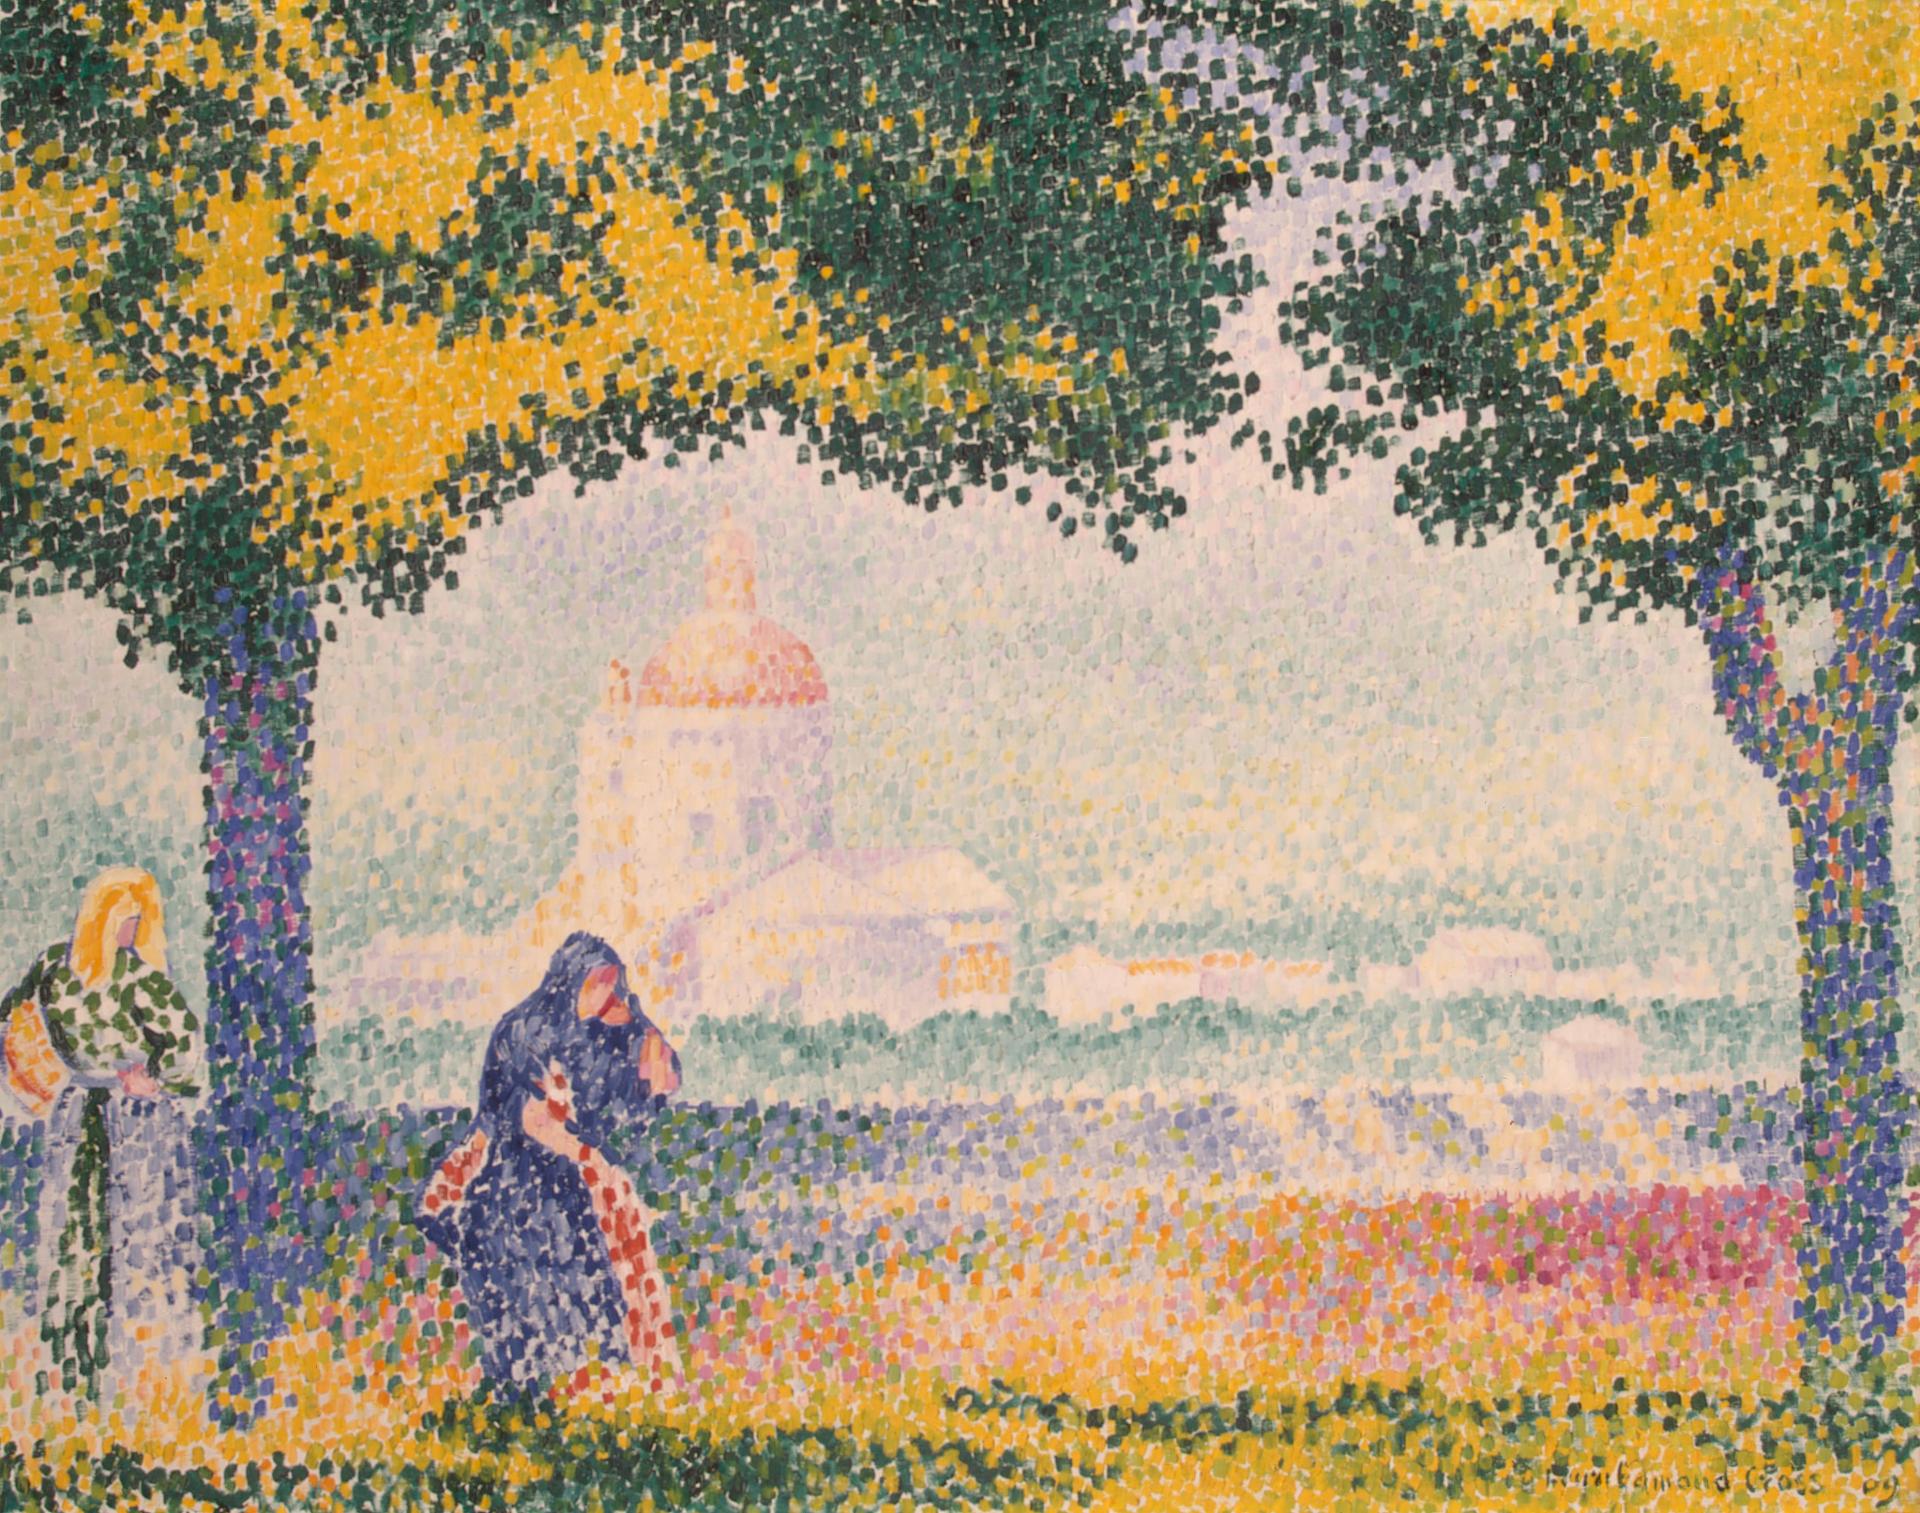 Анри Эдмон Кросс. "Церковь Санта Мария дельи Анджели близ Ассизи". 1909.